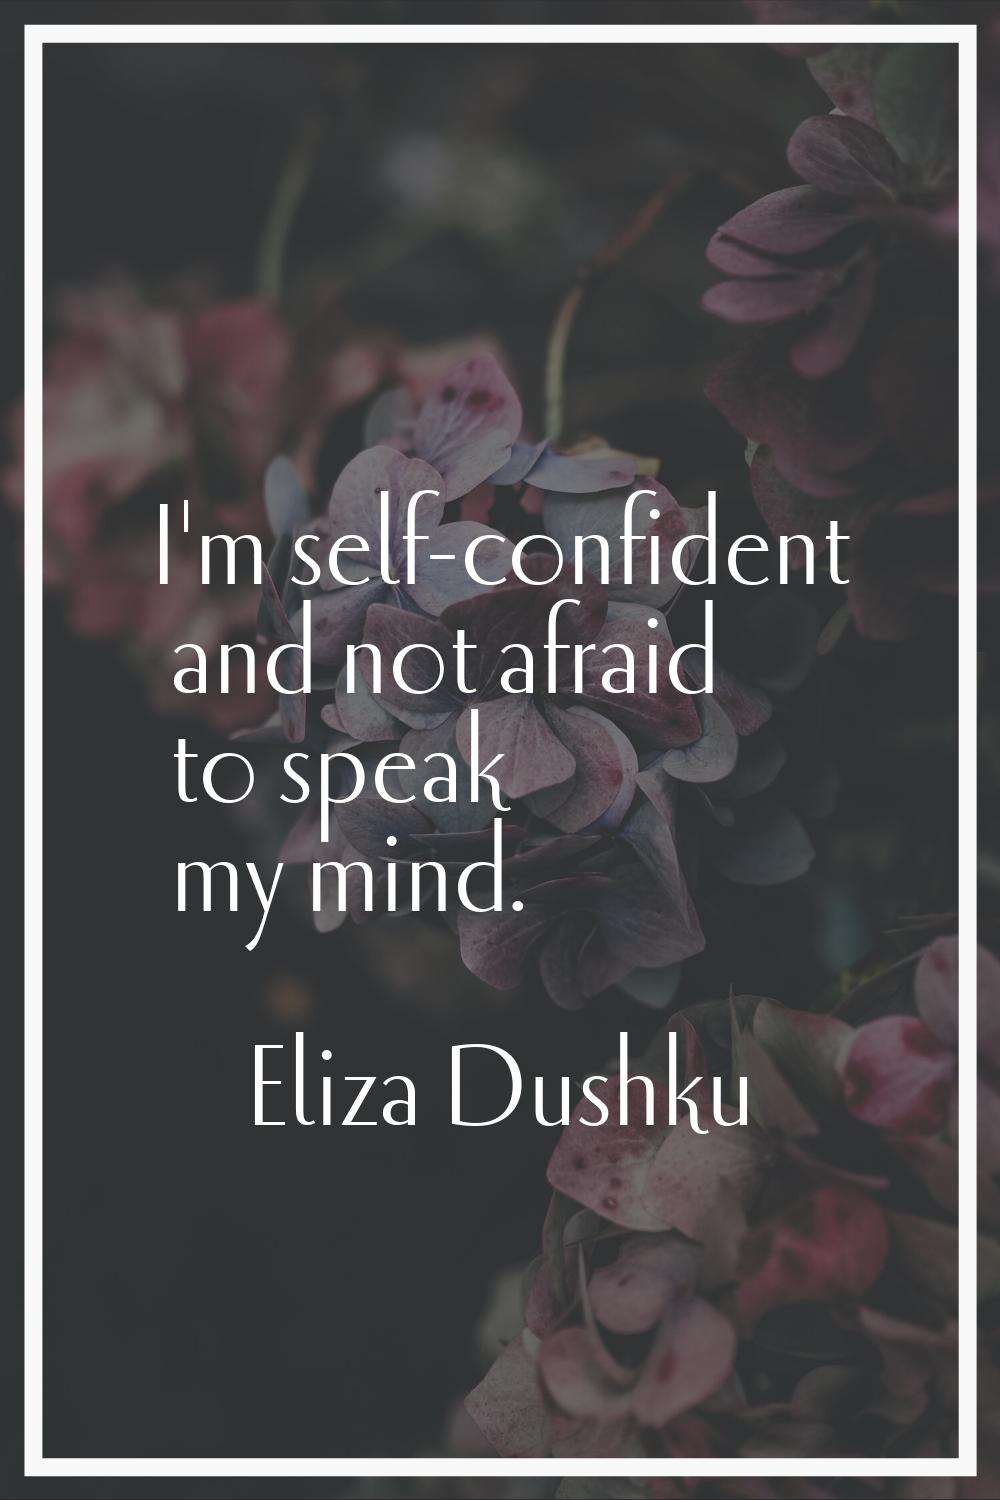 I'm self-confident and not afraid to speak my mind.